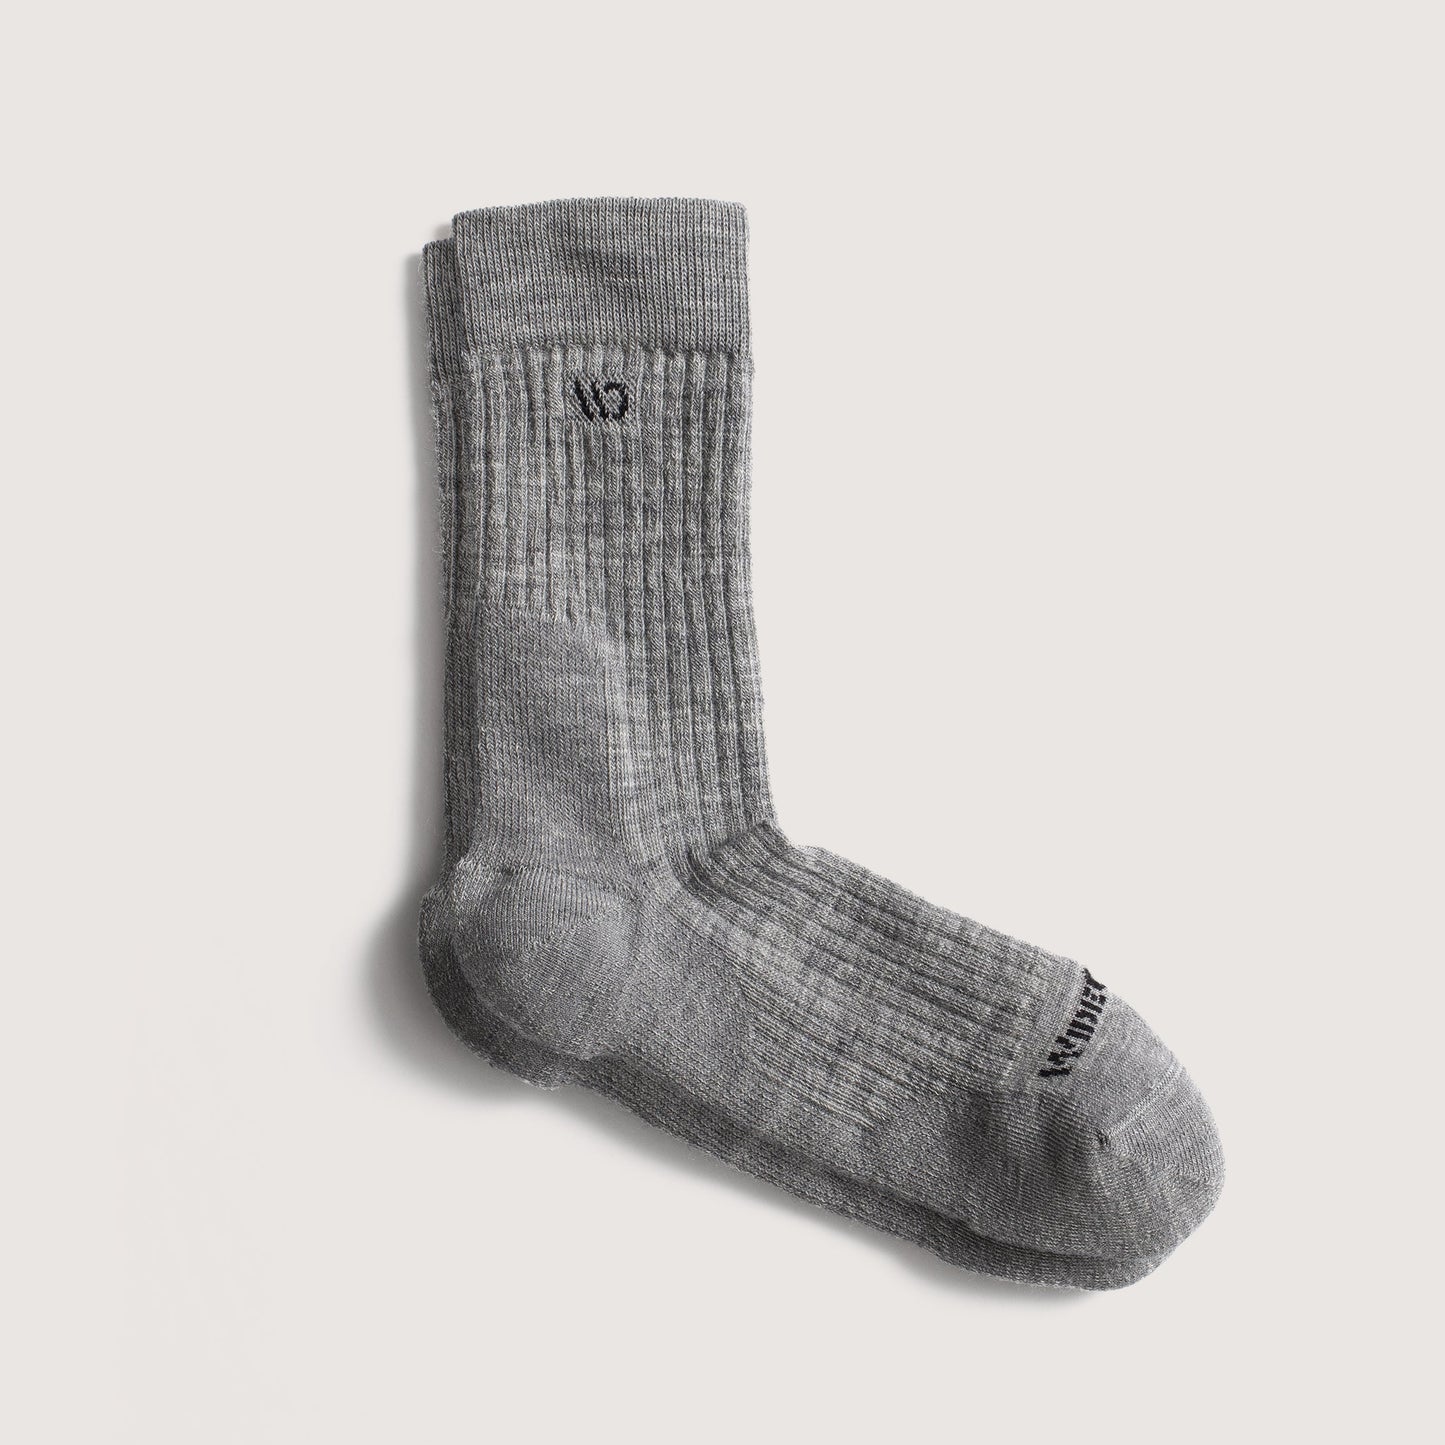 Flat socks, featuring black logo, with light gray body --Black/Light Gray/Denim